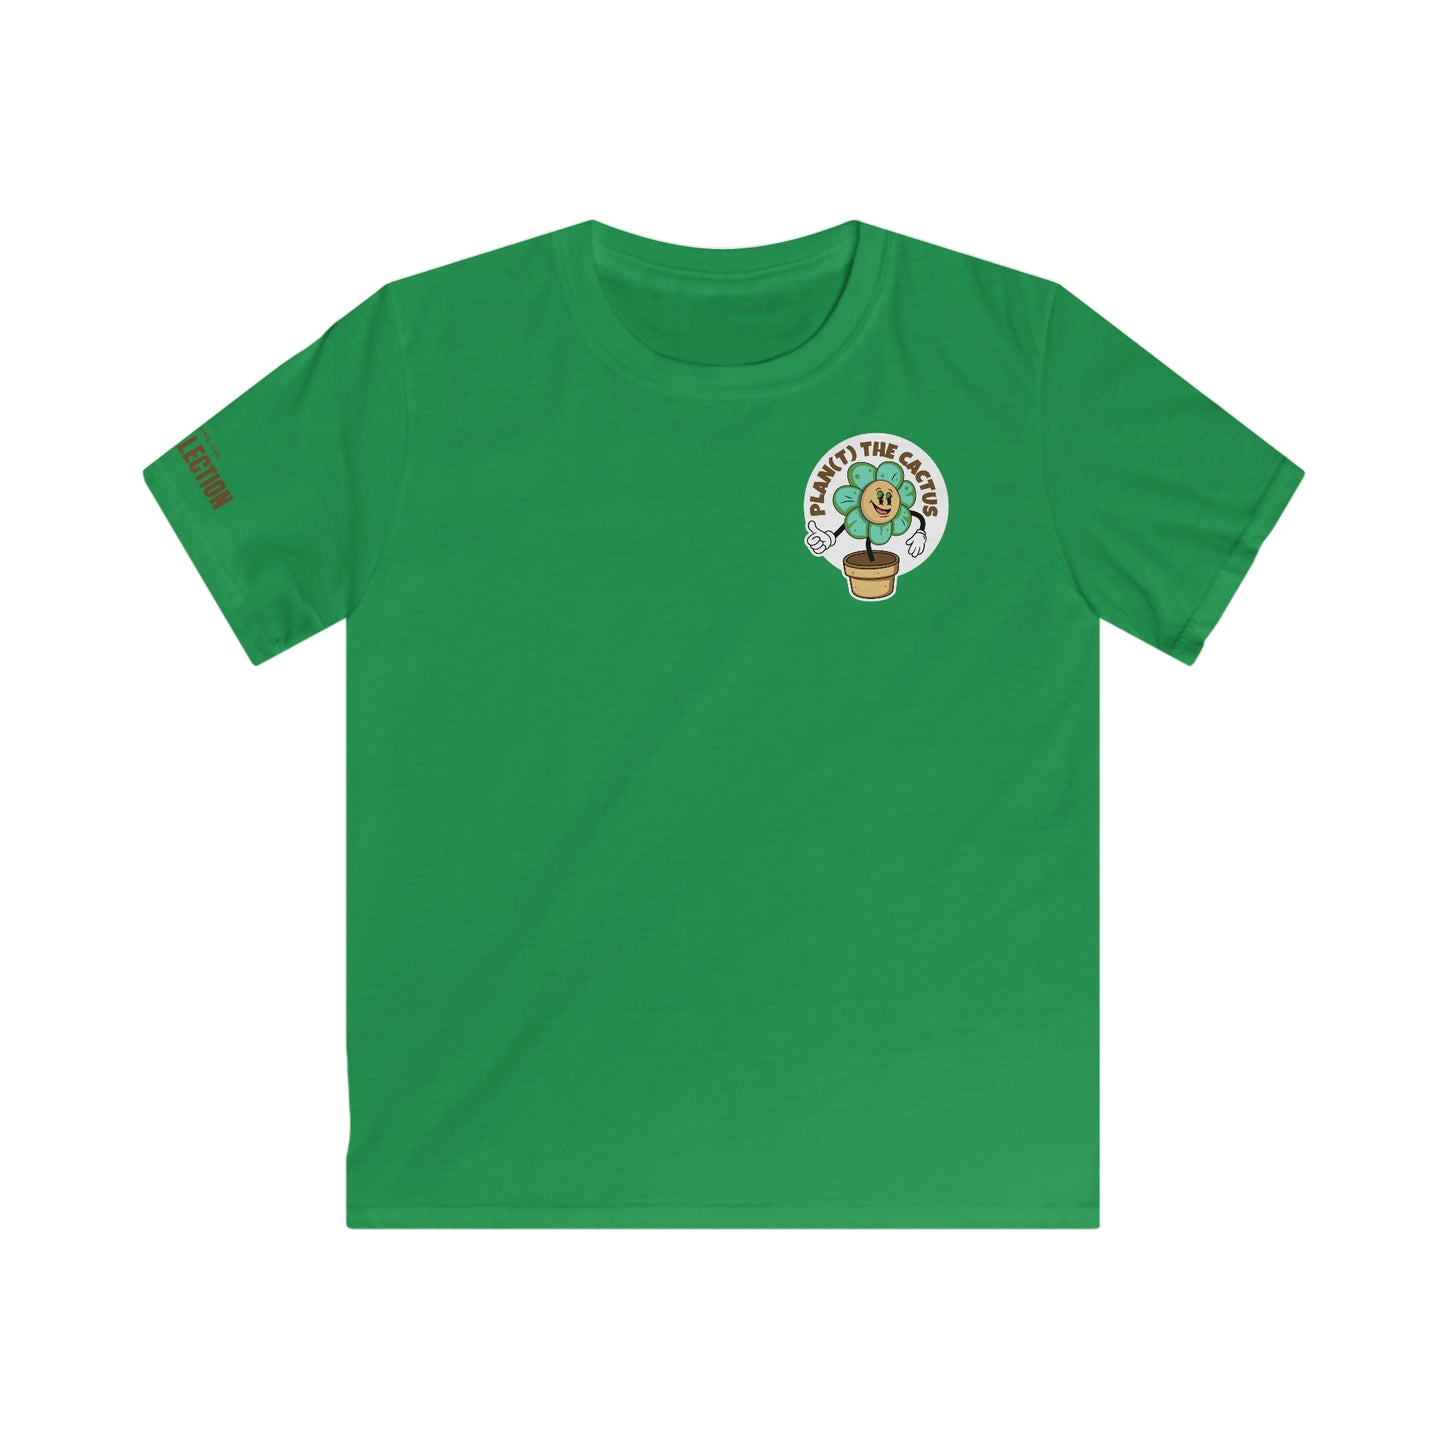 Cool Cactus : Kid's Unisex T-Shirt – High Jinks Apparel